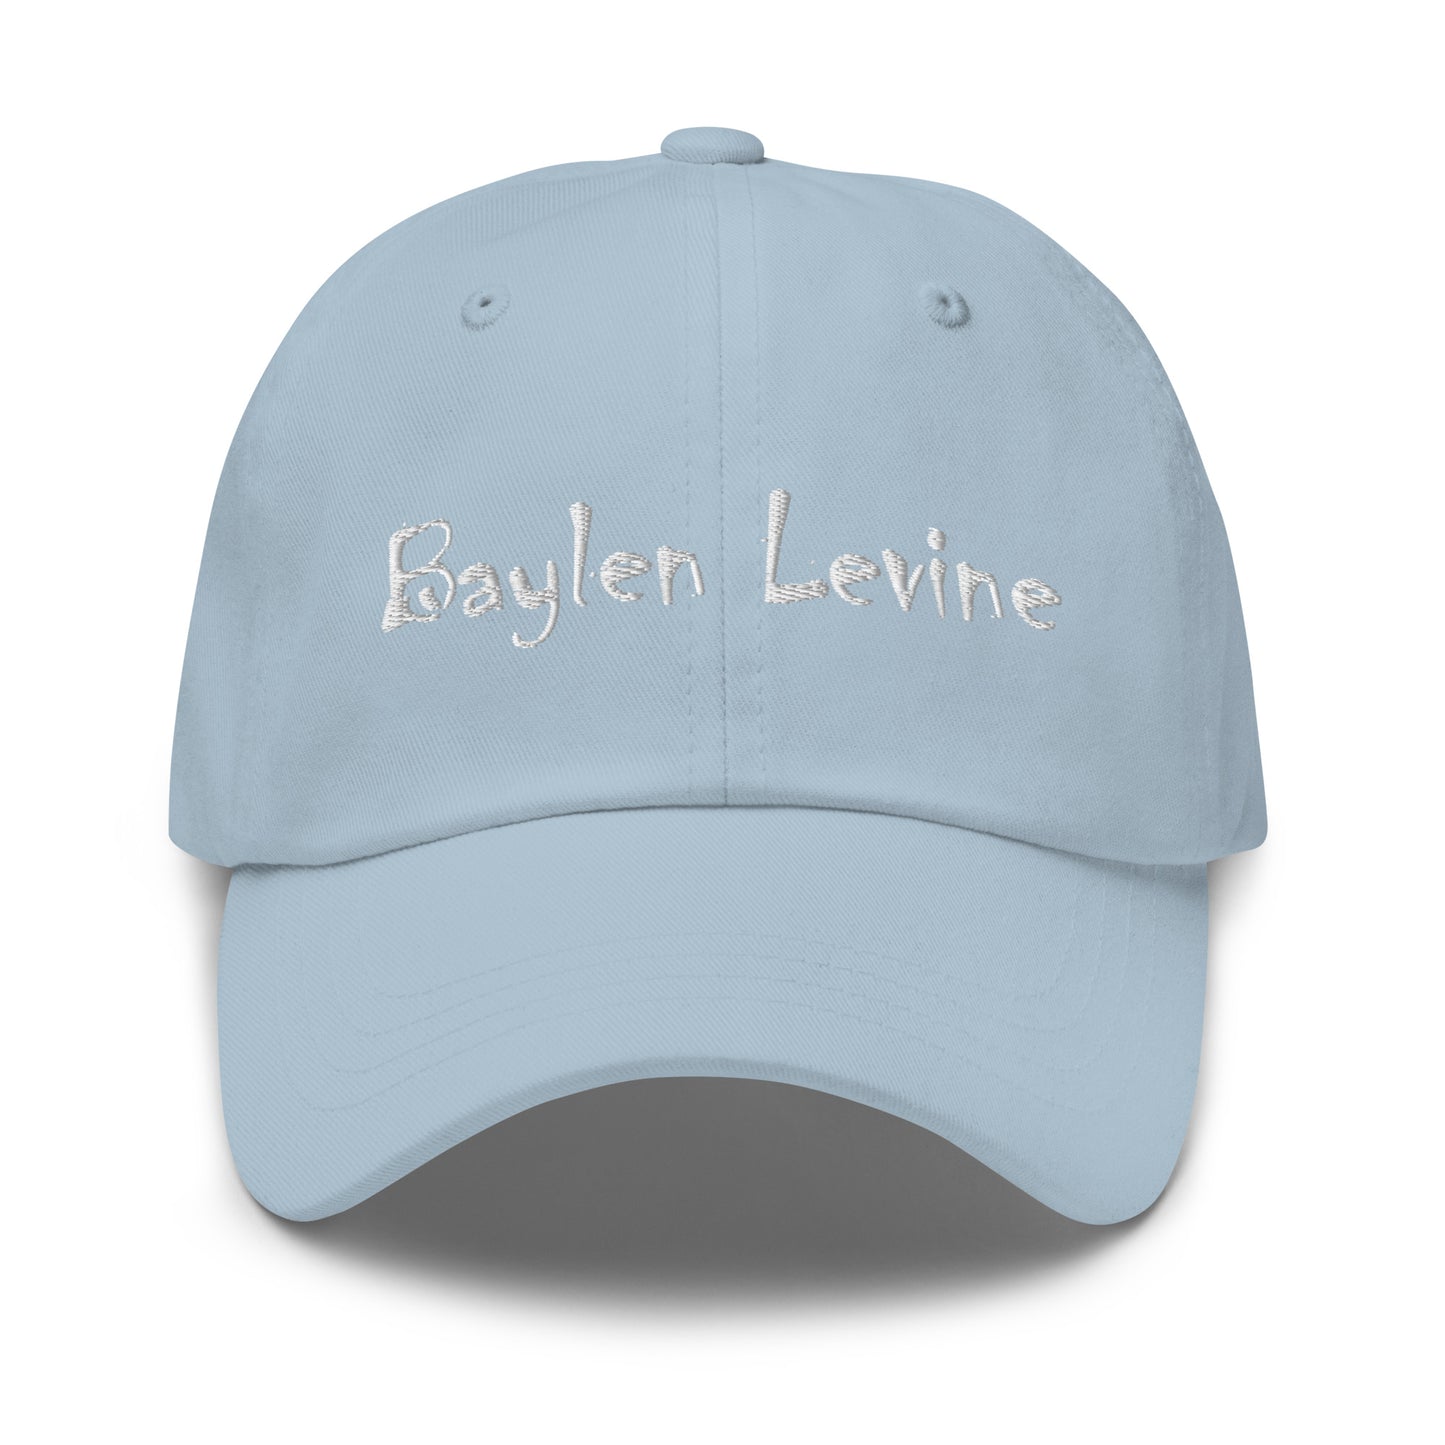 Baylen Levine Dad / Baseball Caps